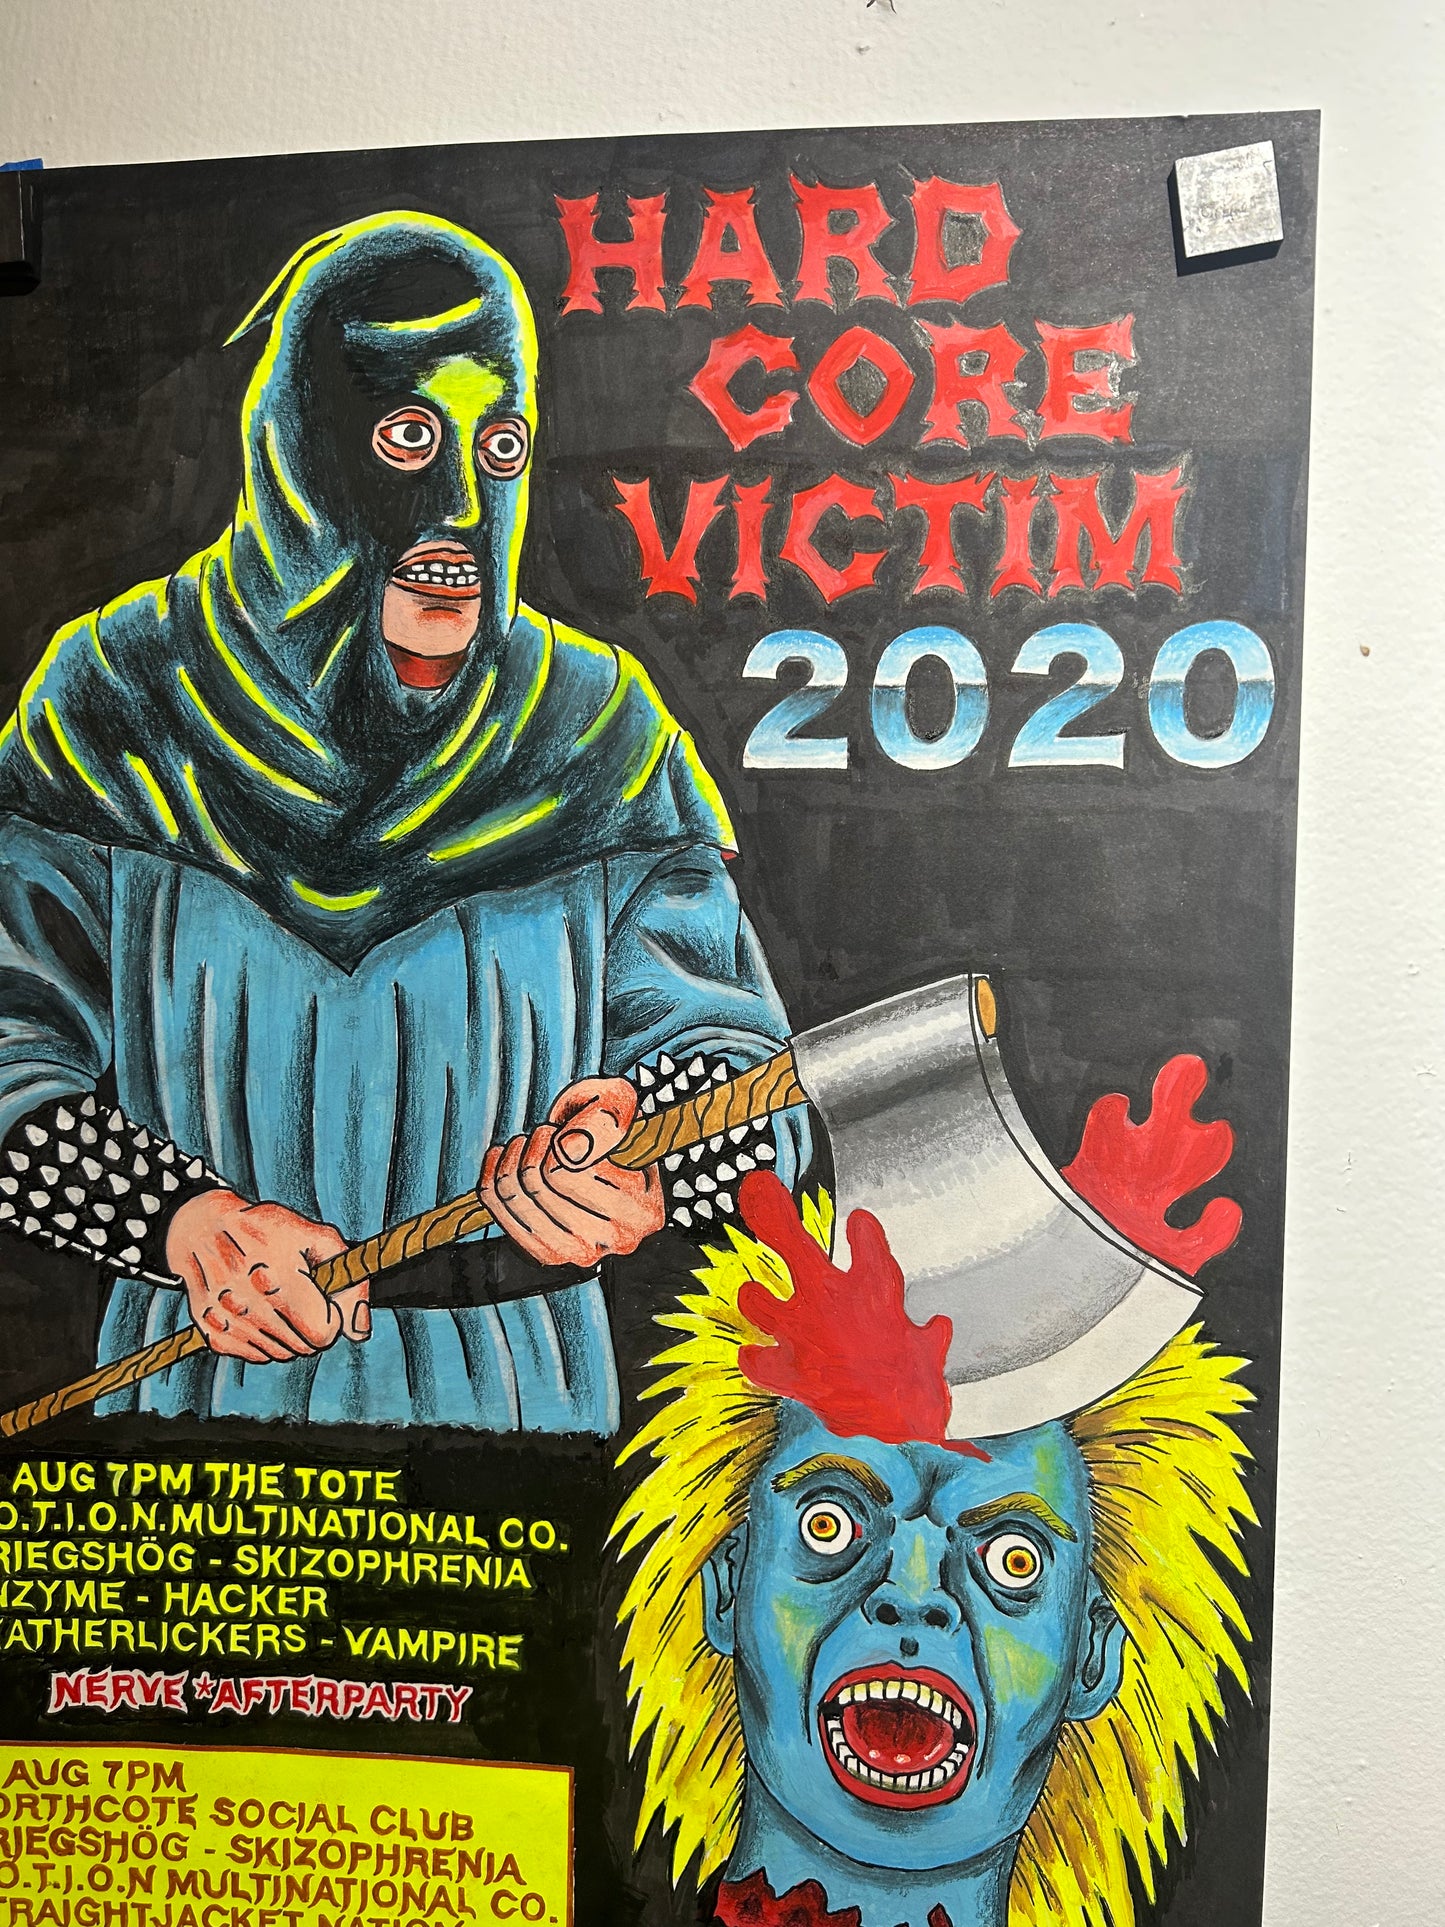 Death/Traitors "Hardcore Victim" (2020)